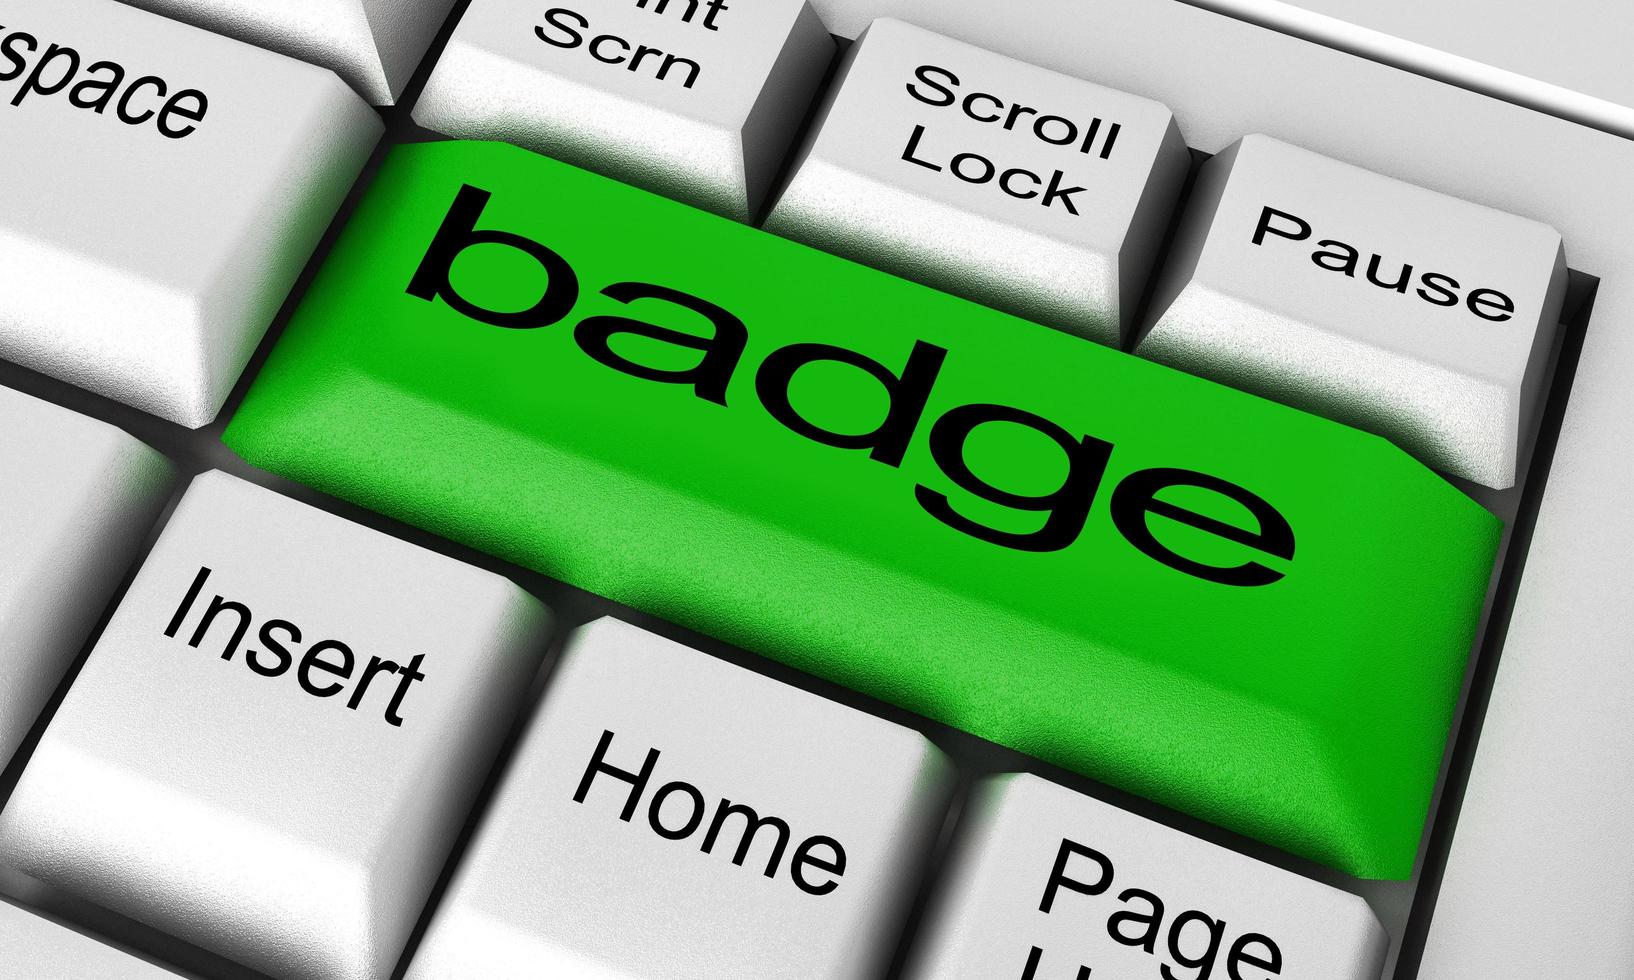 badge word on keyboard button photo